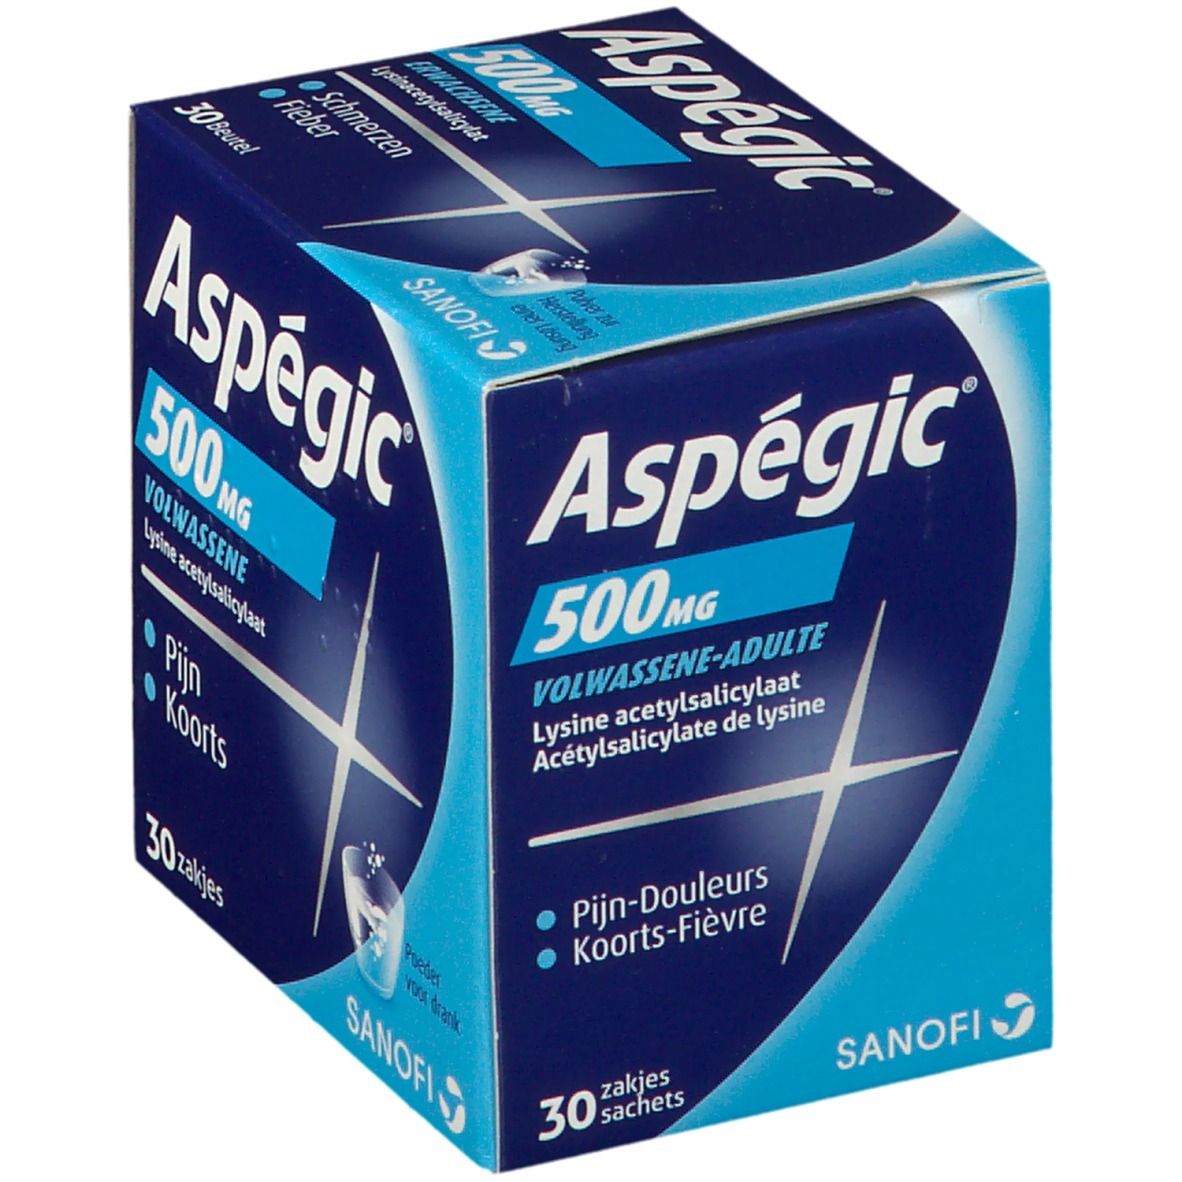 Aspégic 500mg - Douleur